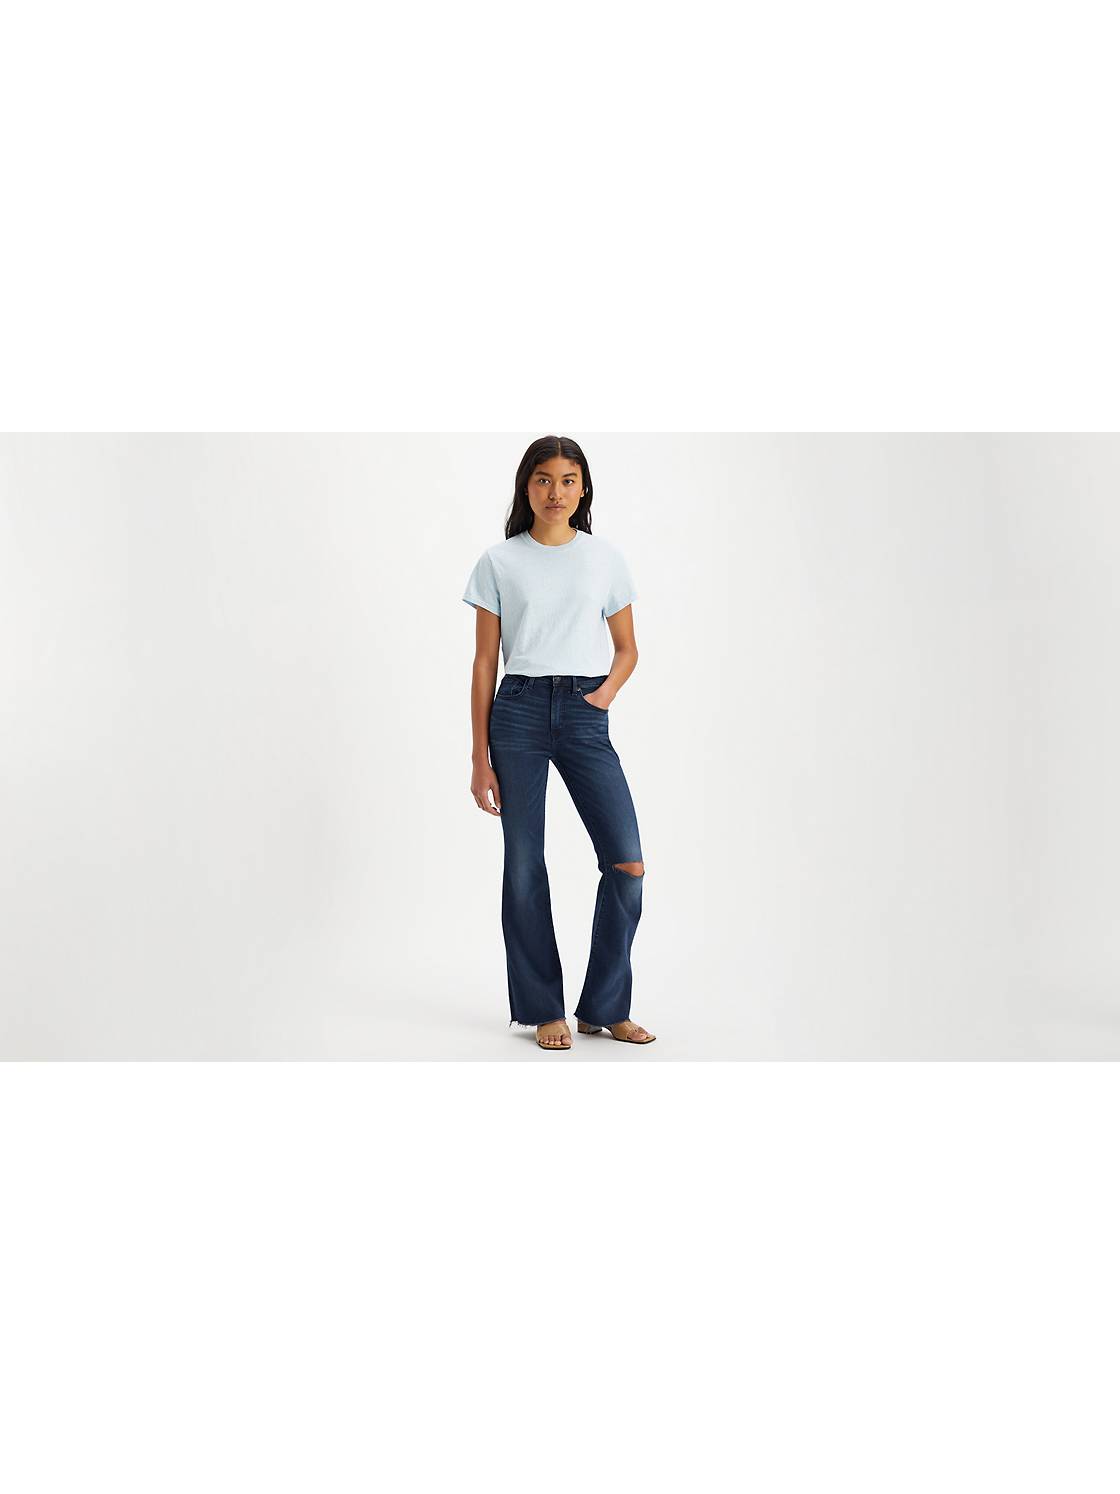 GM FASHION LLP- Women's Lycra Bellbottom pant, trendy Bellbottom For Girls  And Women